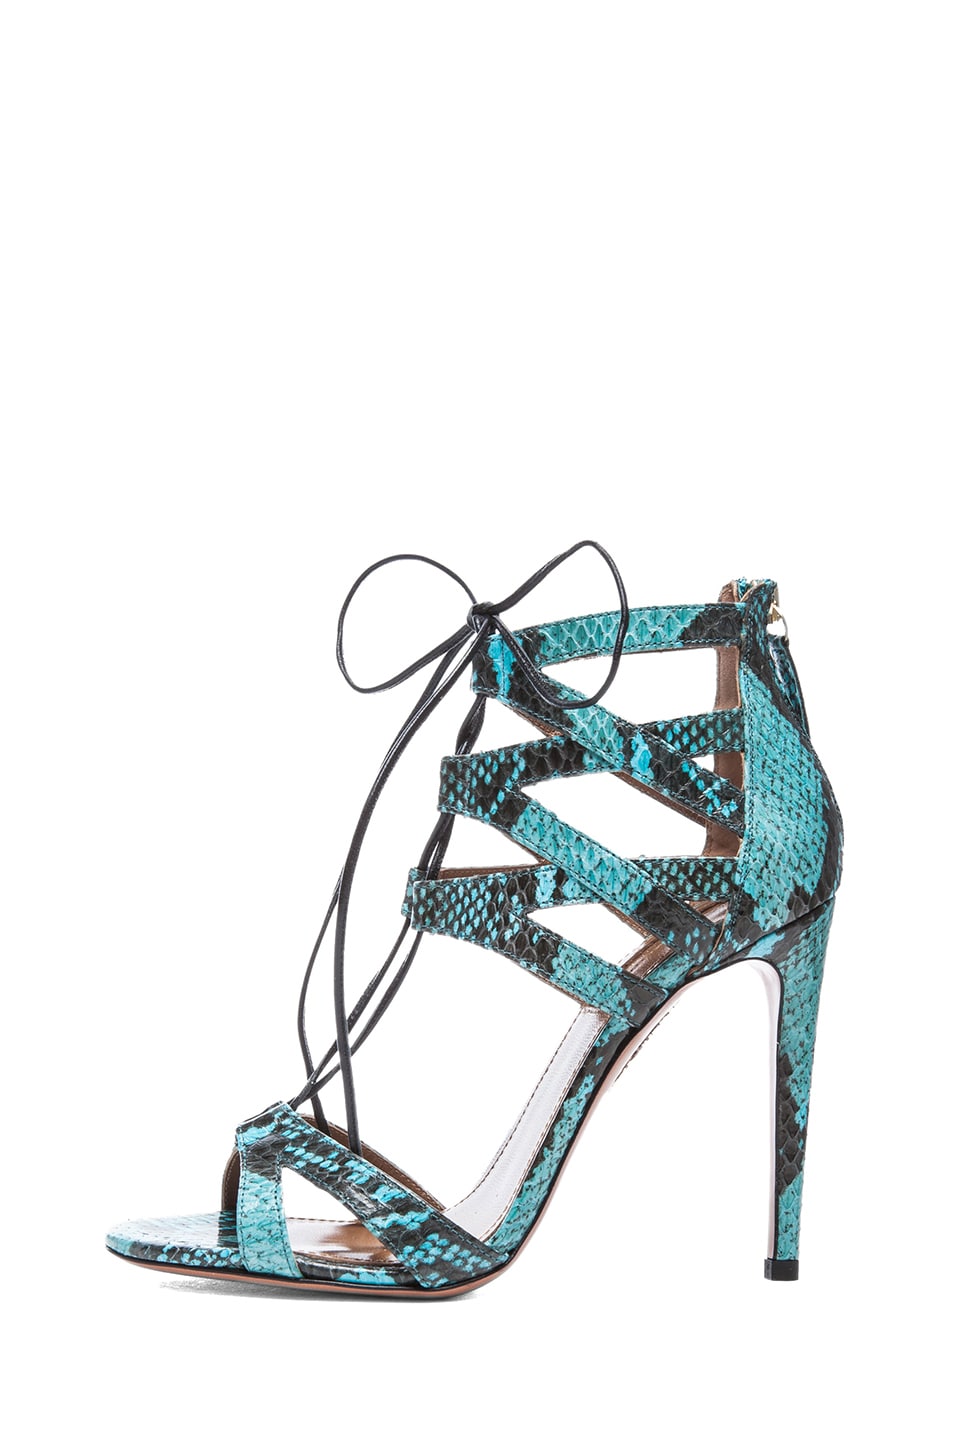 Aquazzura Beverly Hills Elaphe Snakeskin Sandals in Turquoise | FWRD